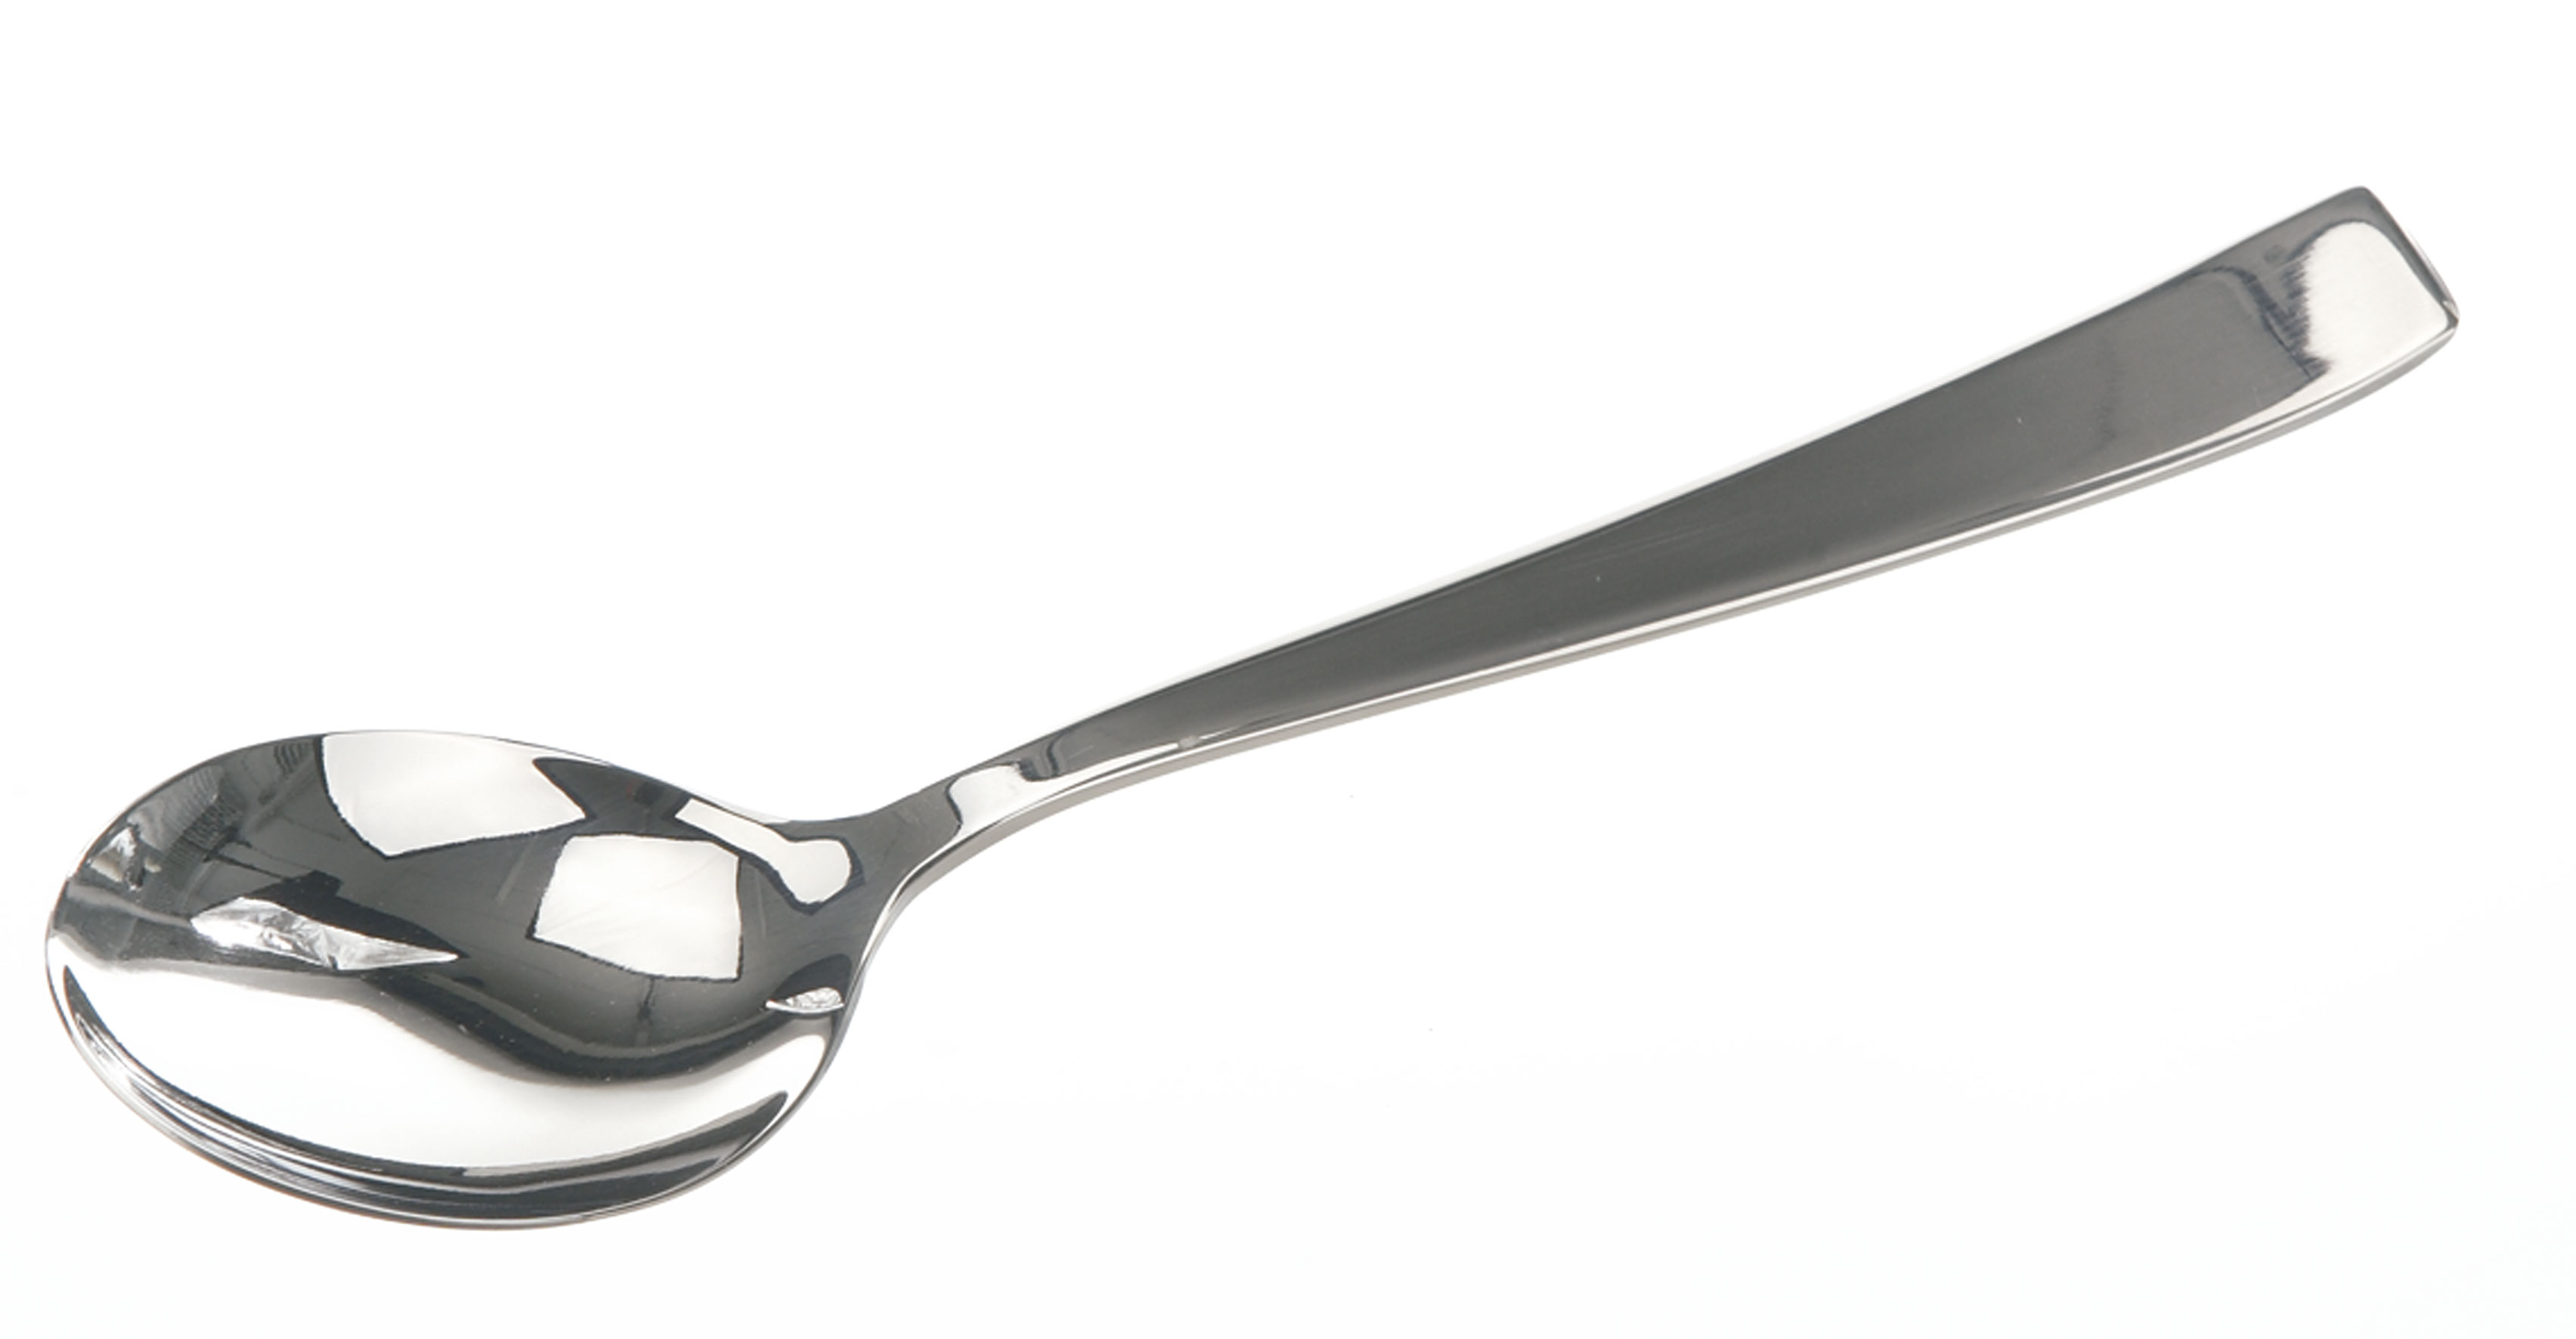 Laboratory spoon. Length (mm): 195. Spatula (mm): 45x60